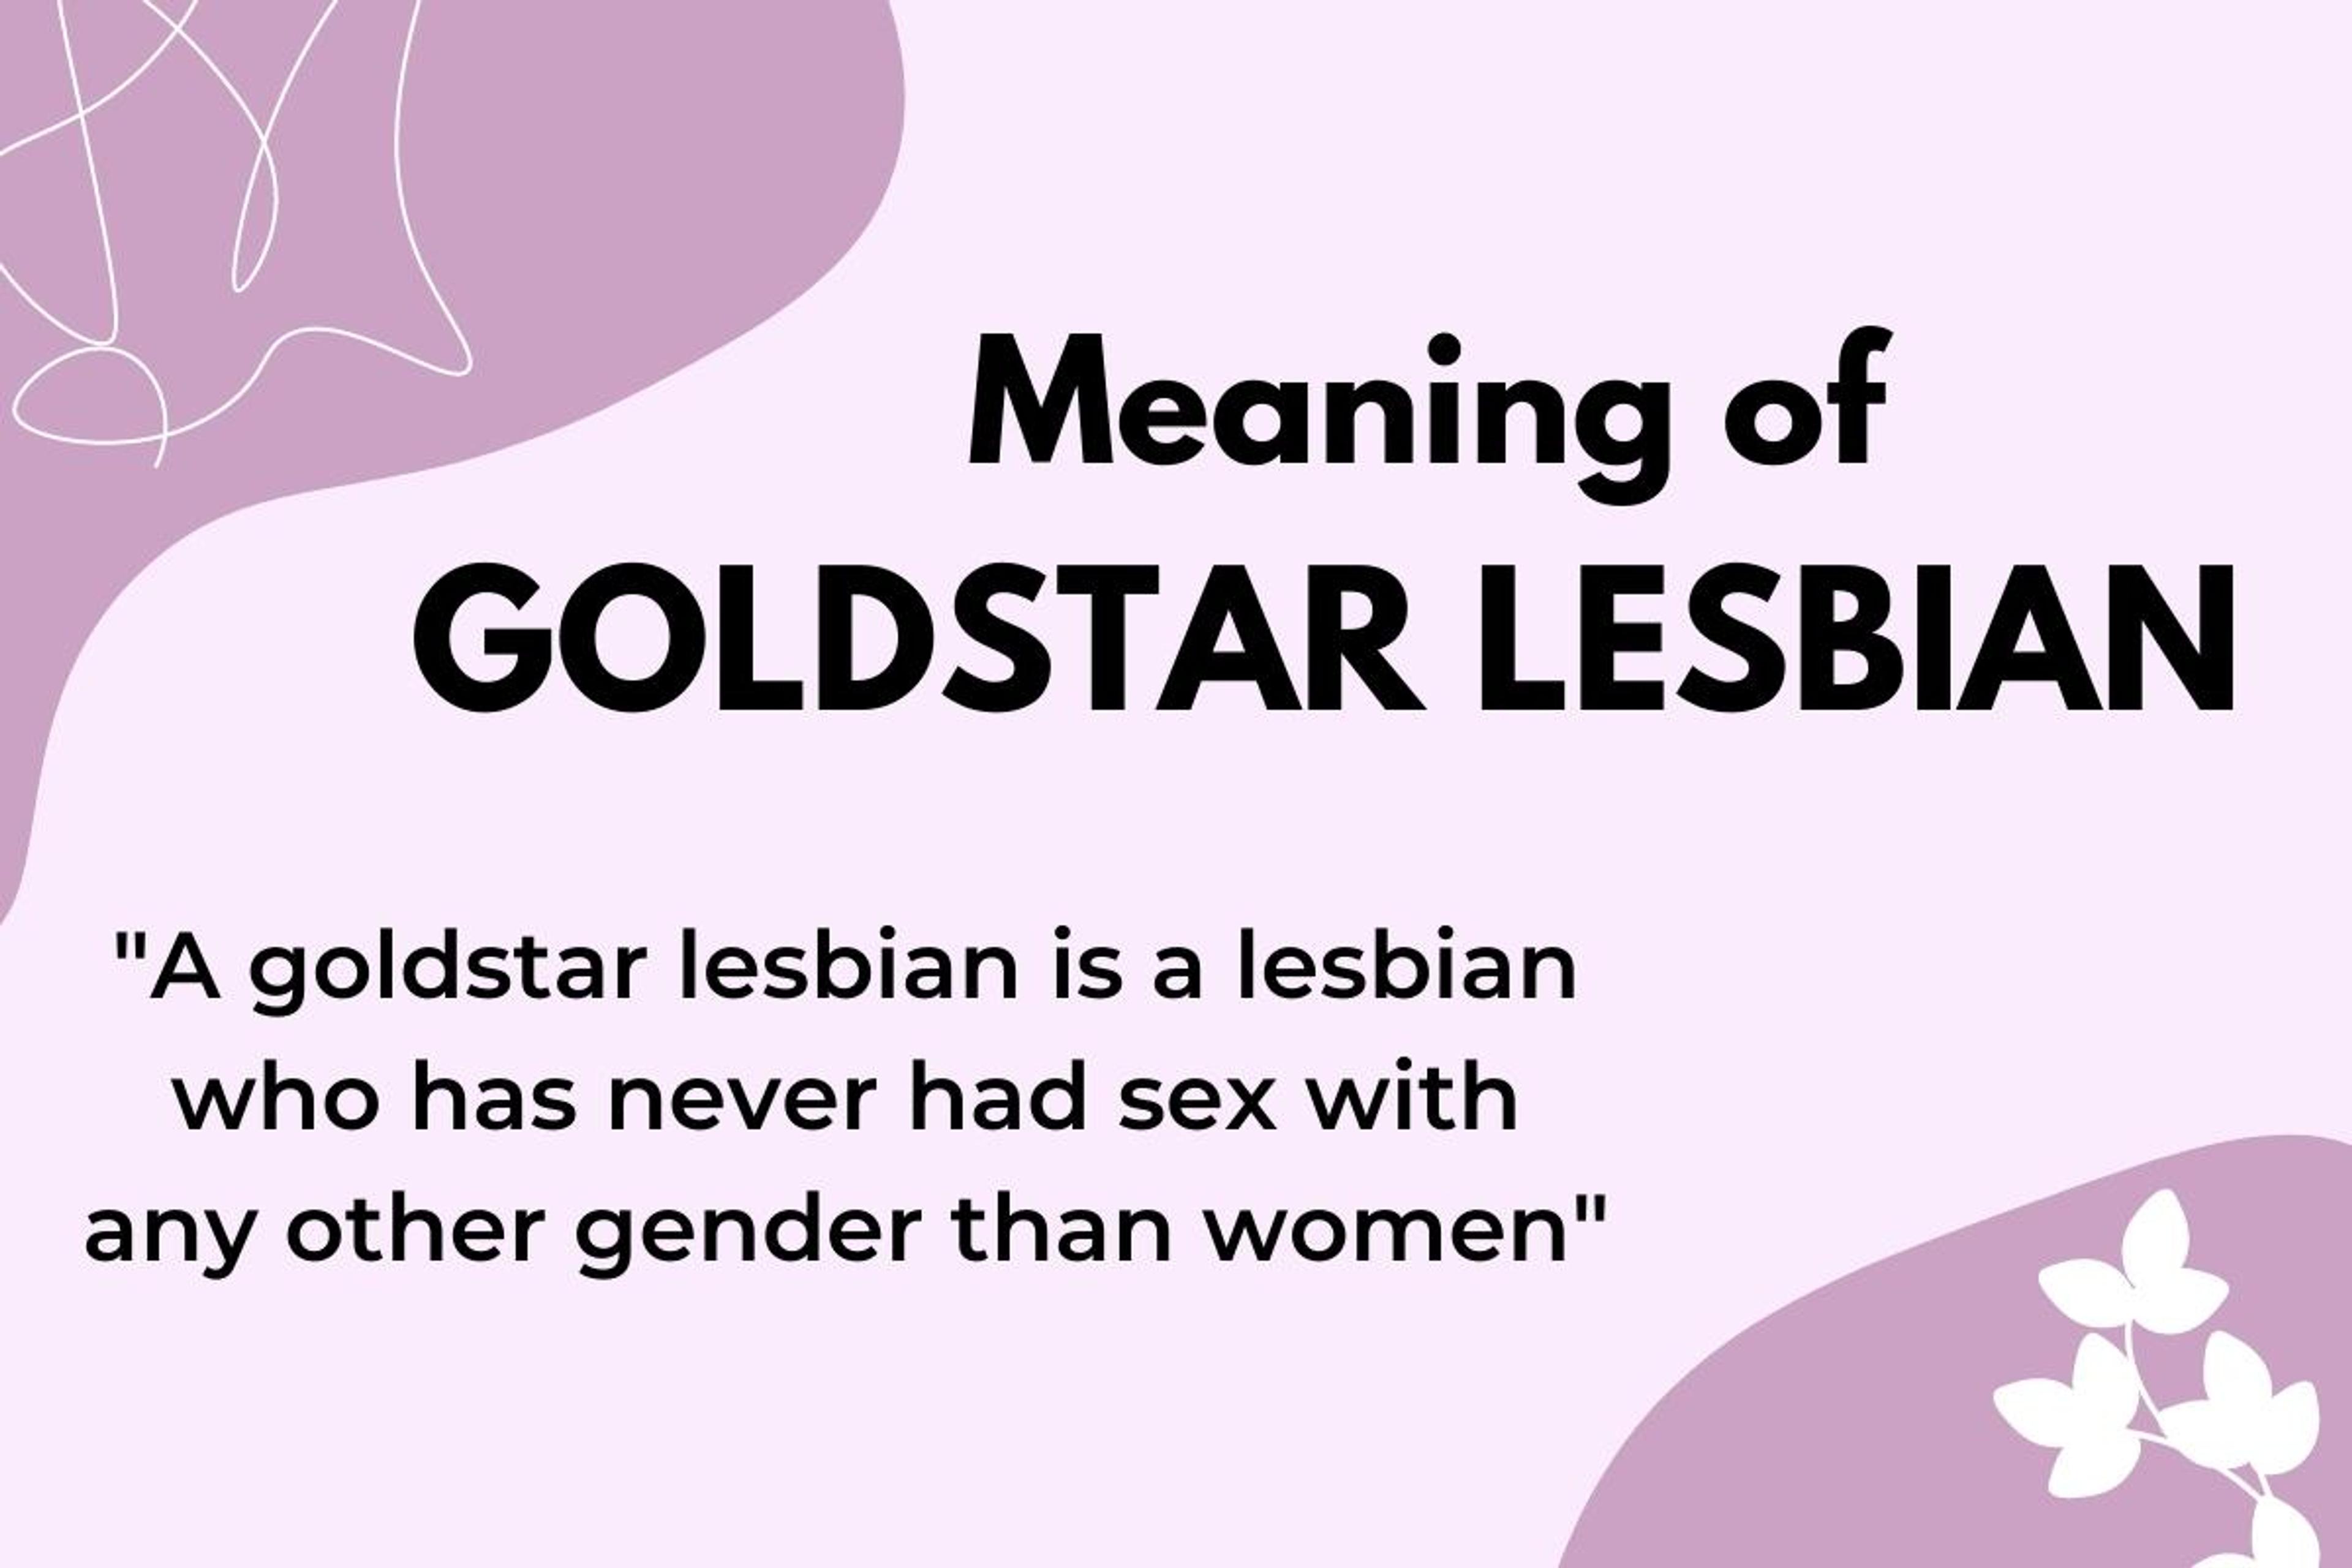 Goldstar lesbian meaning